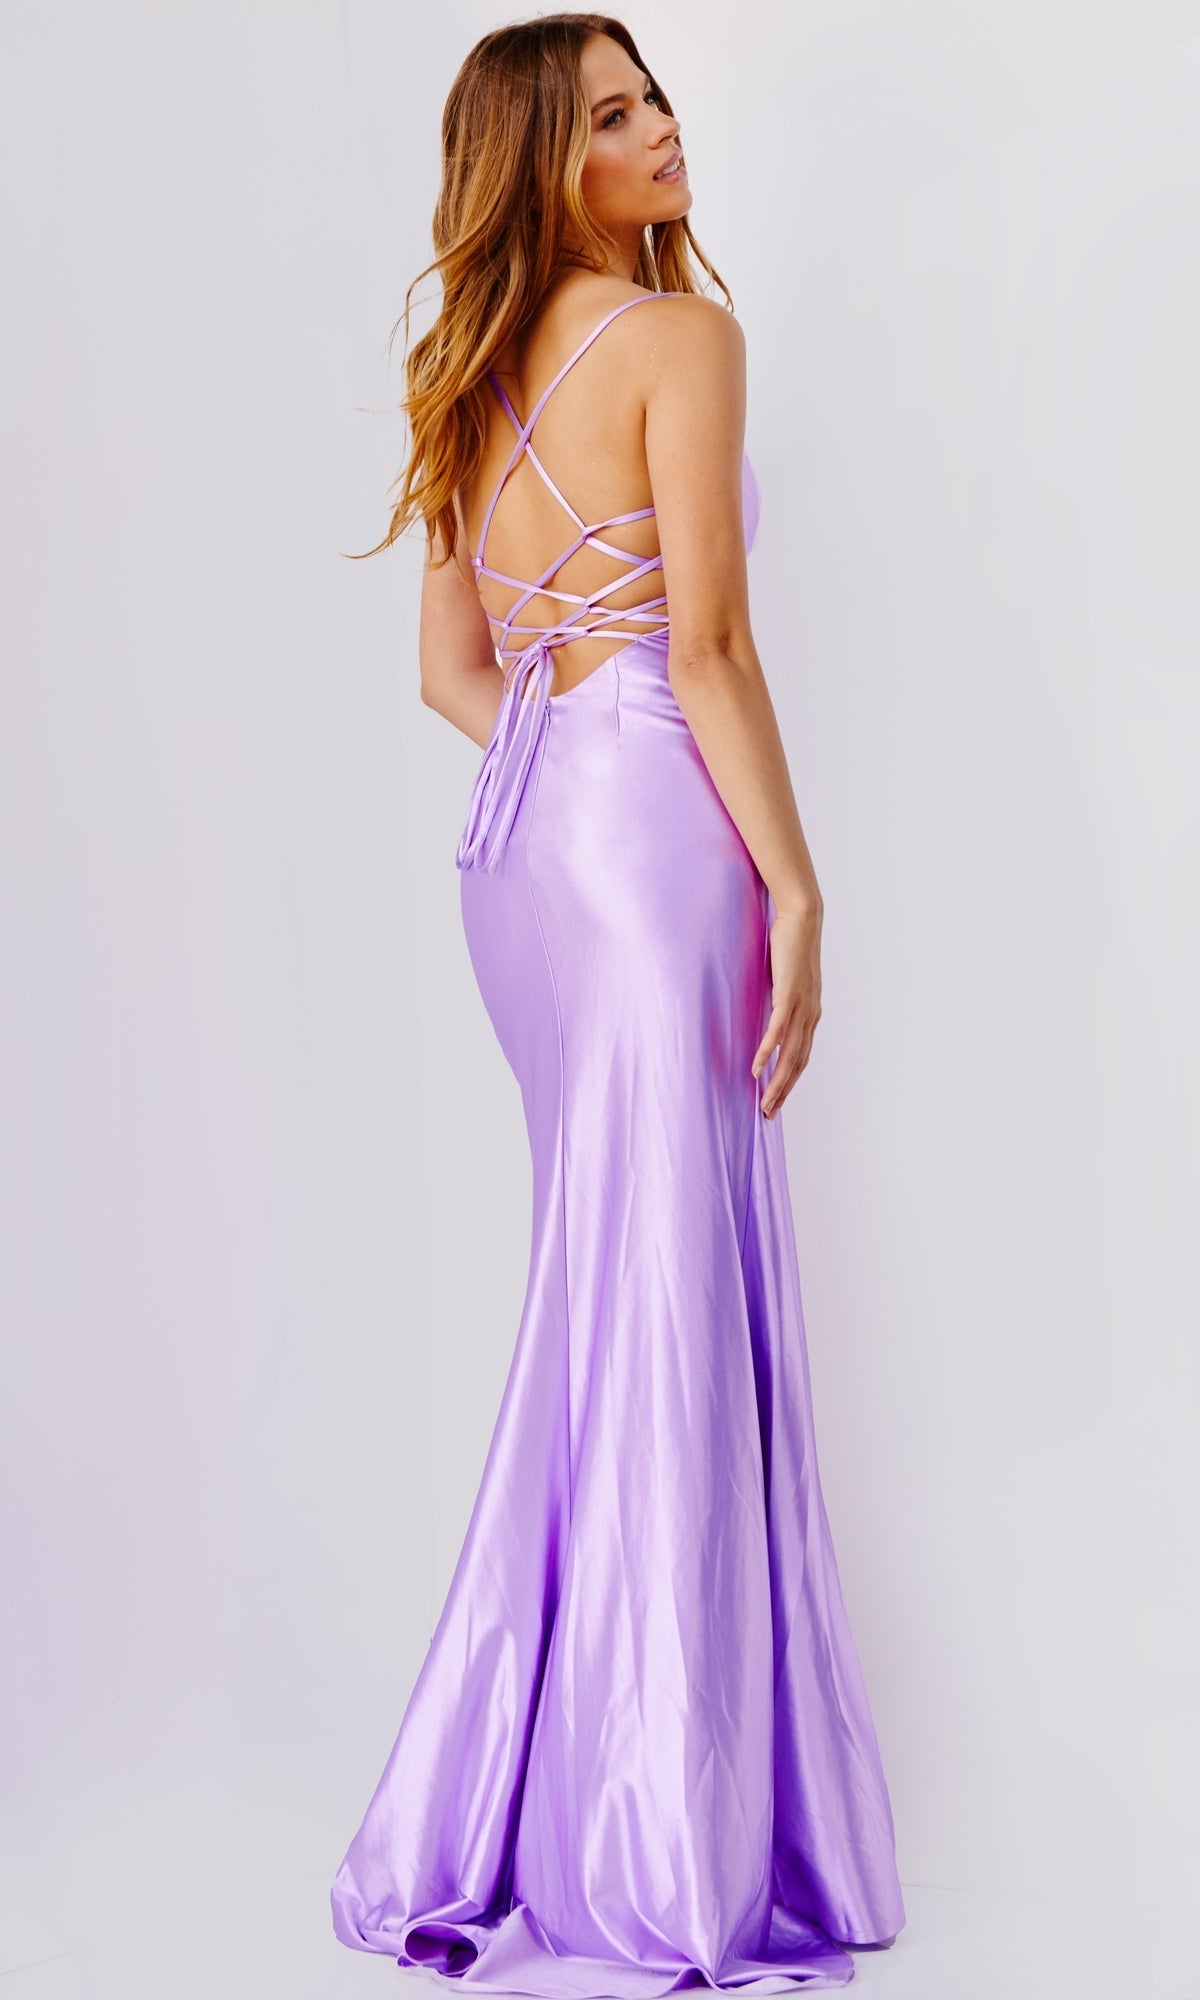 Cowl-Neck Lilac Purple Prom Dress from JVN by Jovani